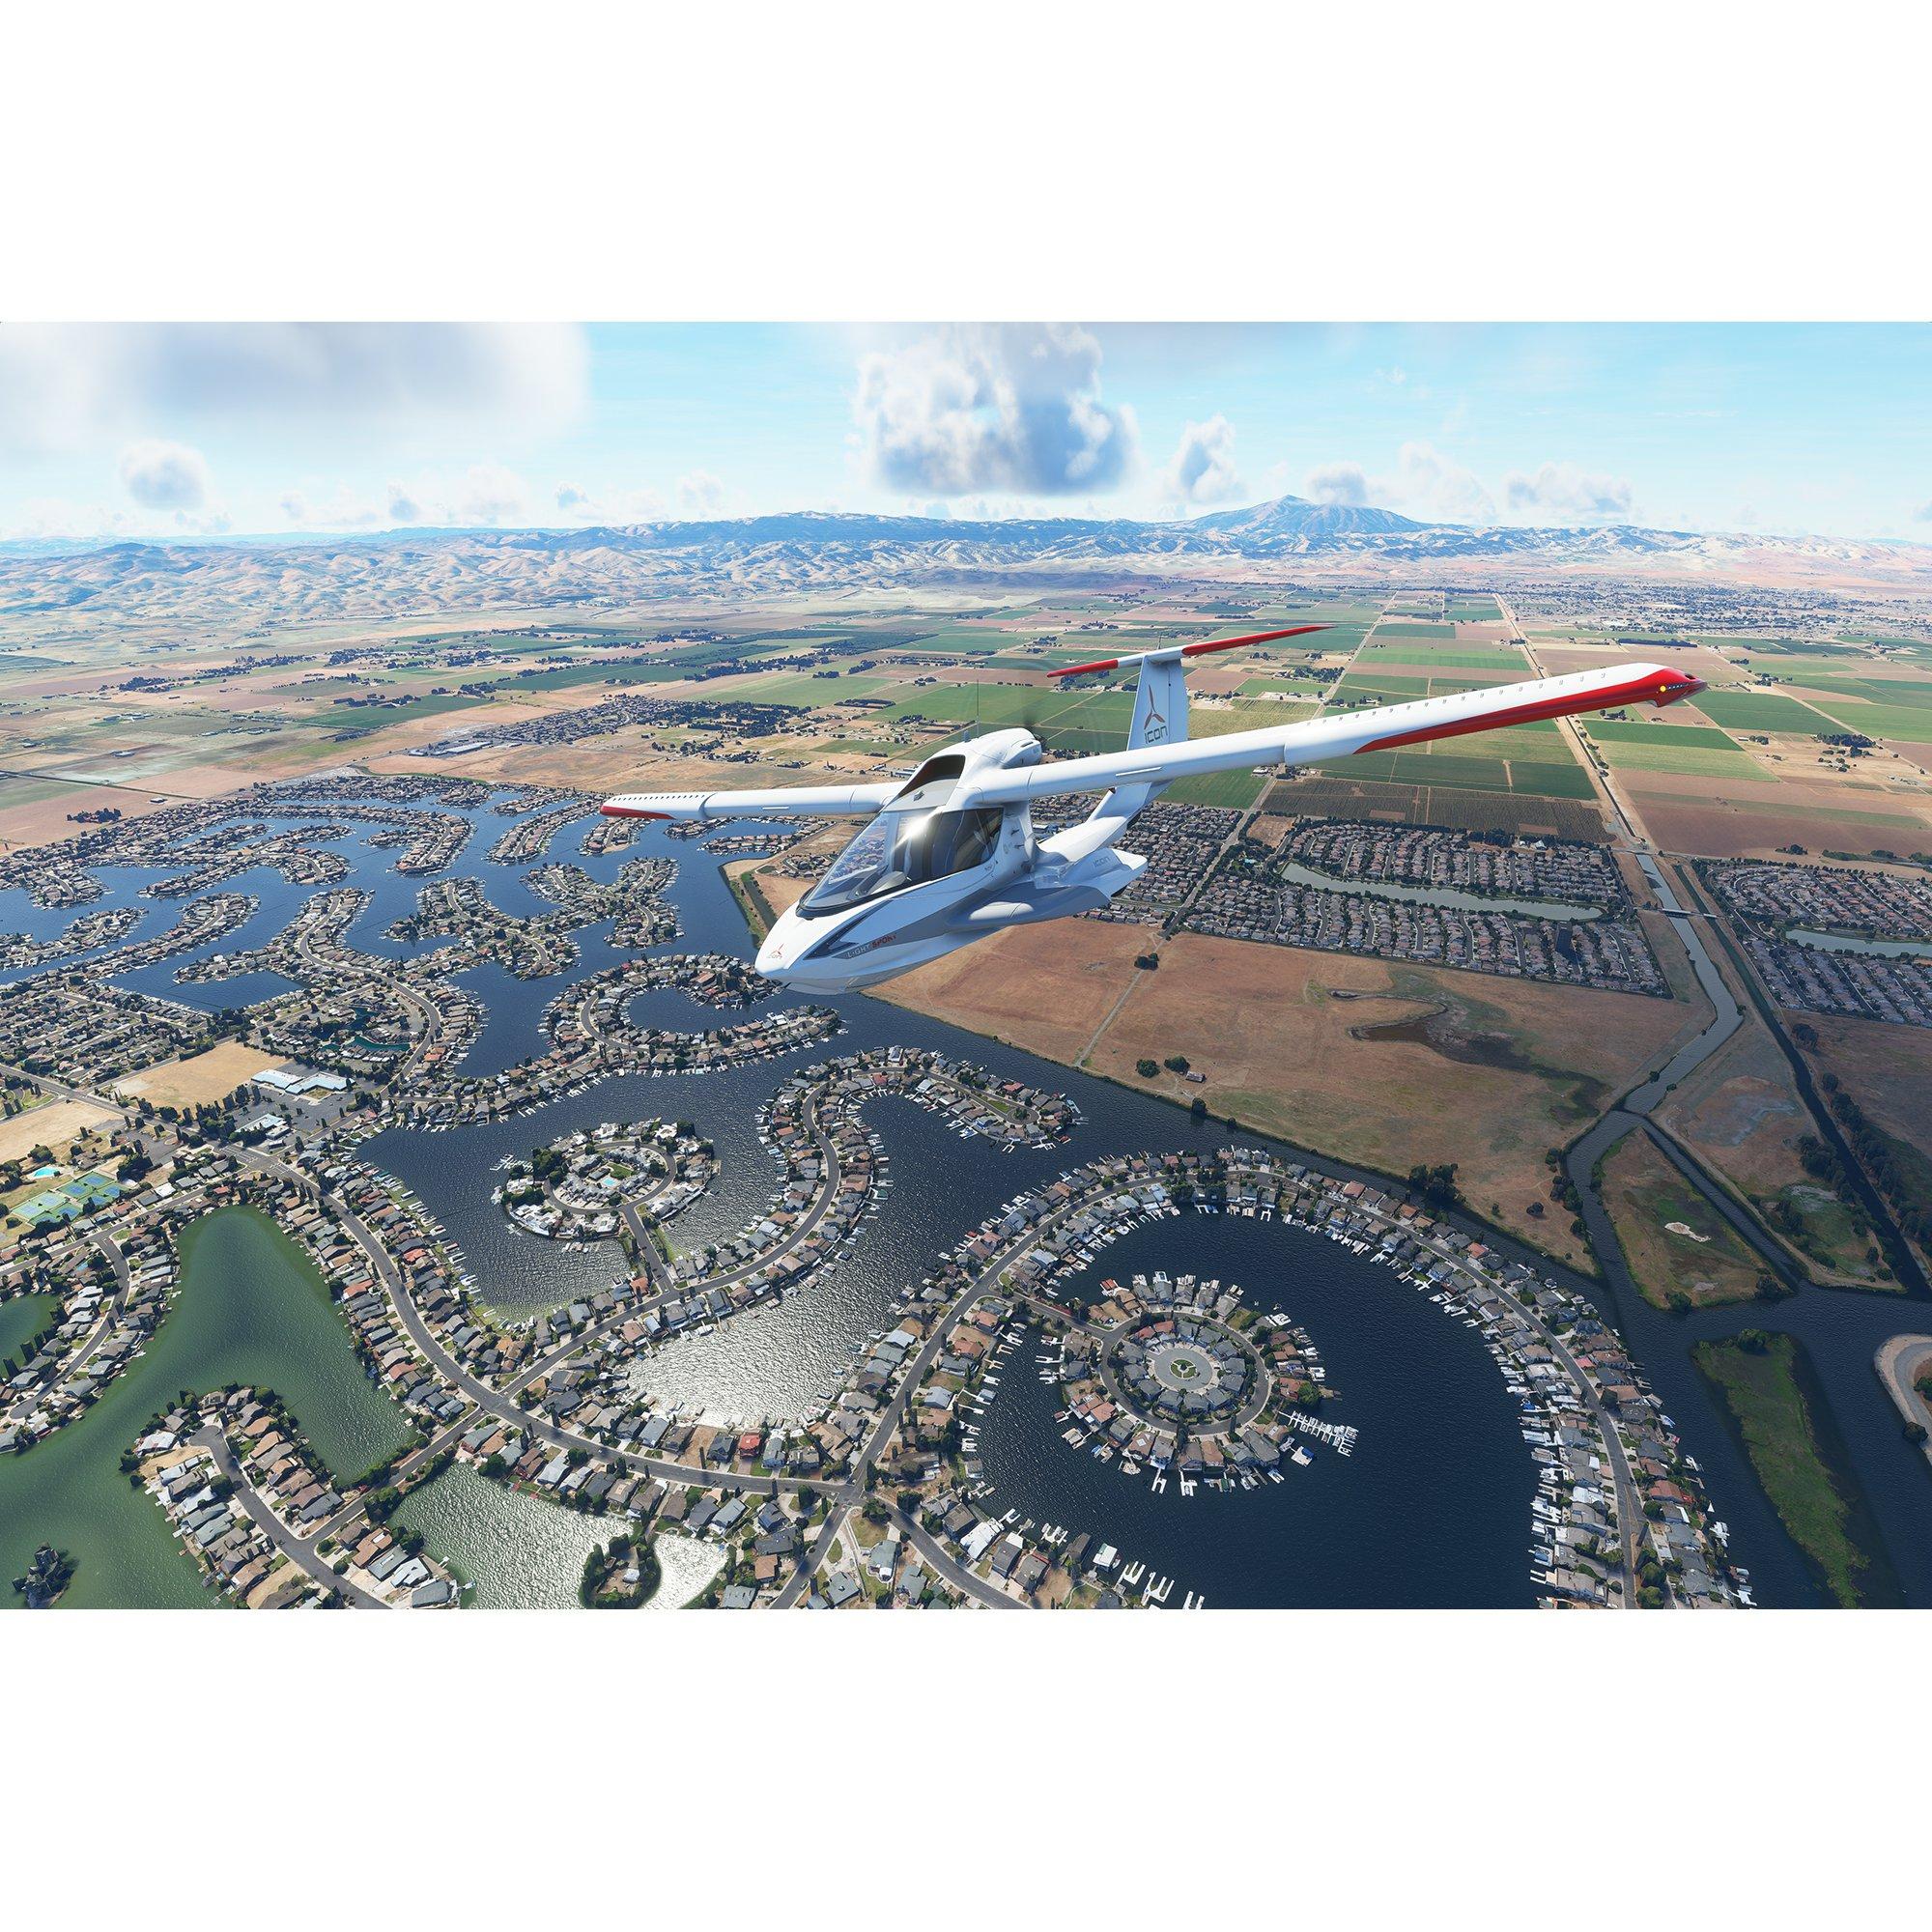  Microsoft Flight Simulator 40th Anniversary – Standard Edition  – Xbox Series X